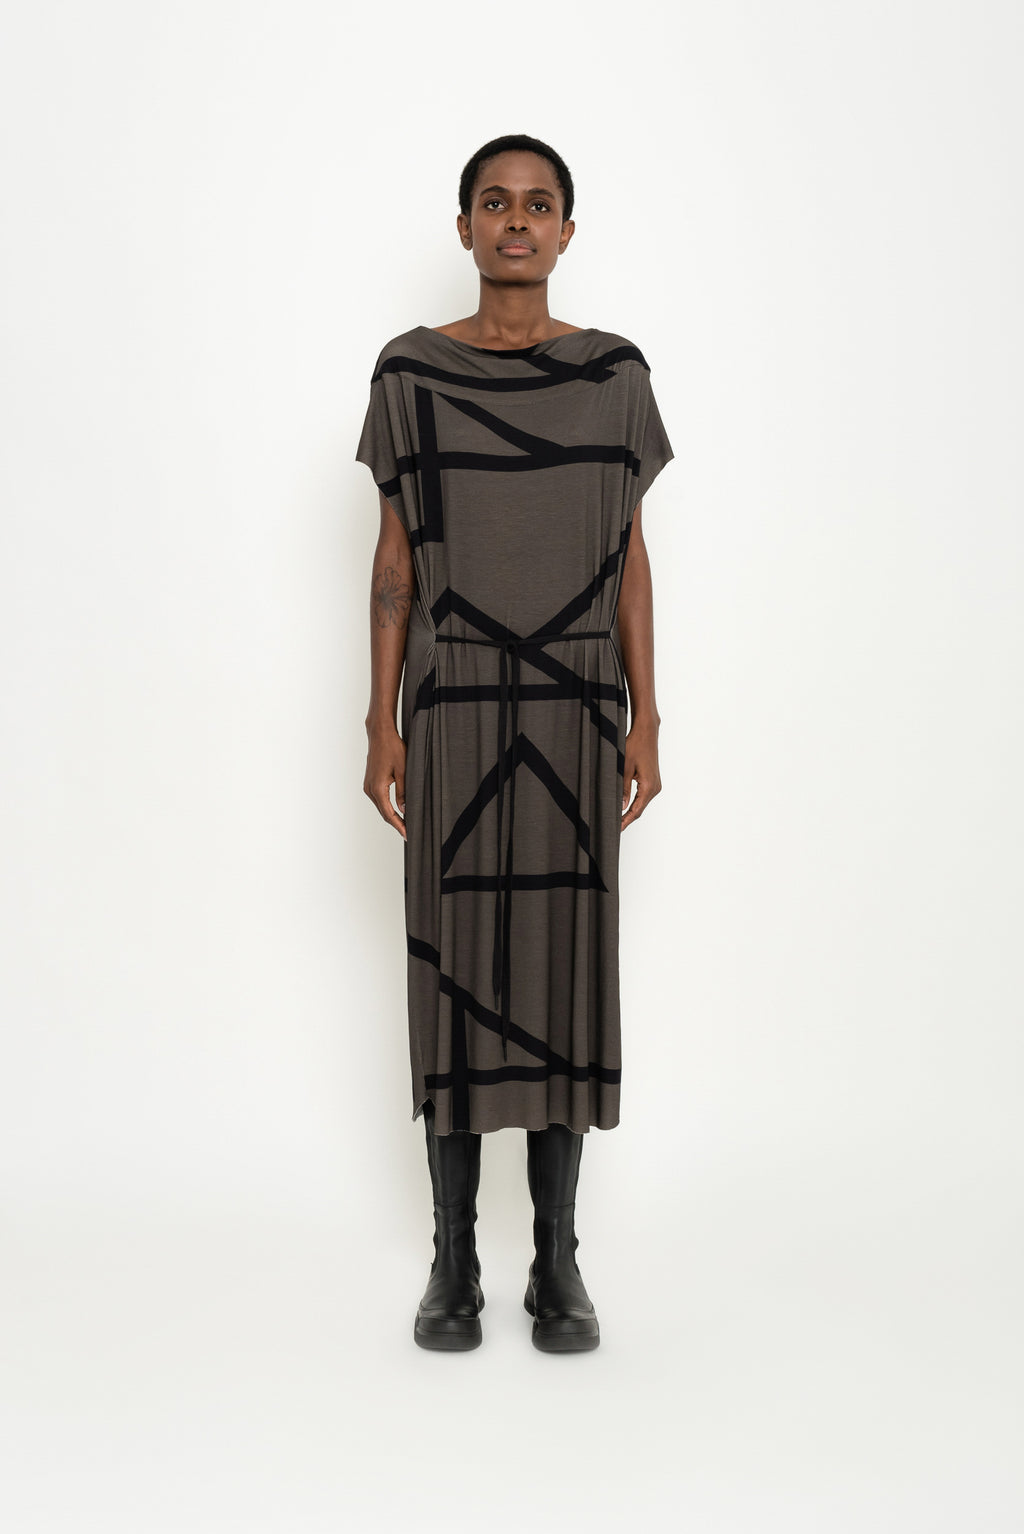 Tunic-Style Dress with Geometric Print | Skunk